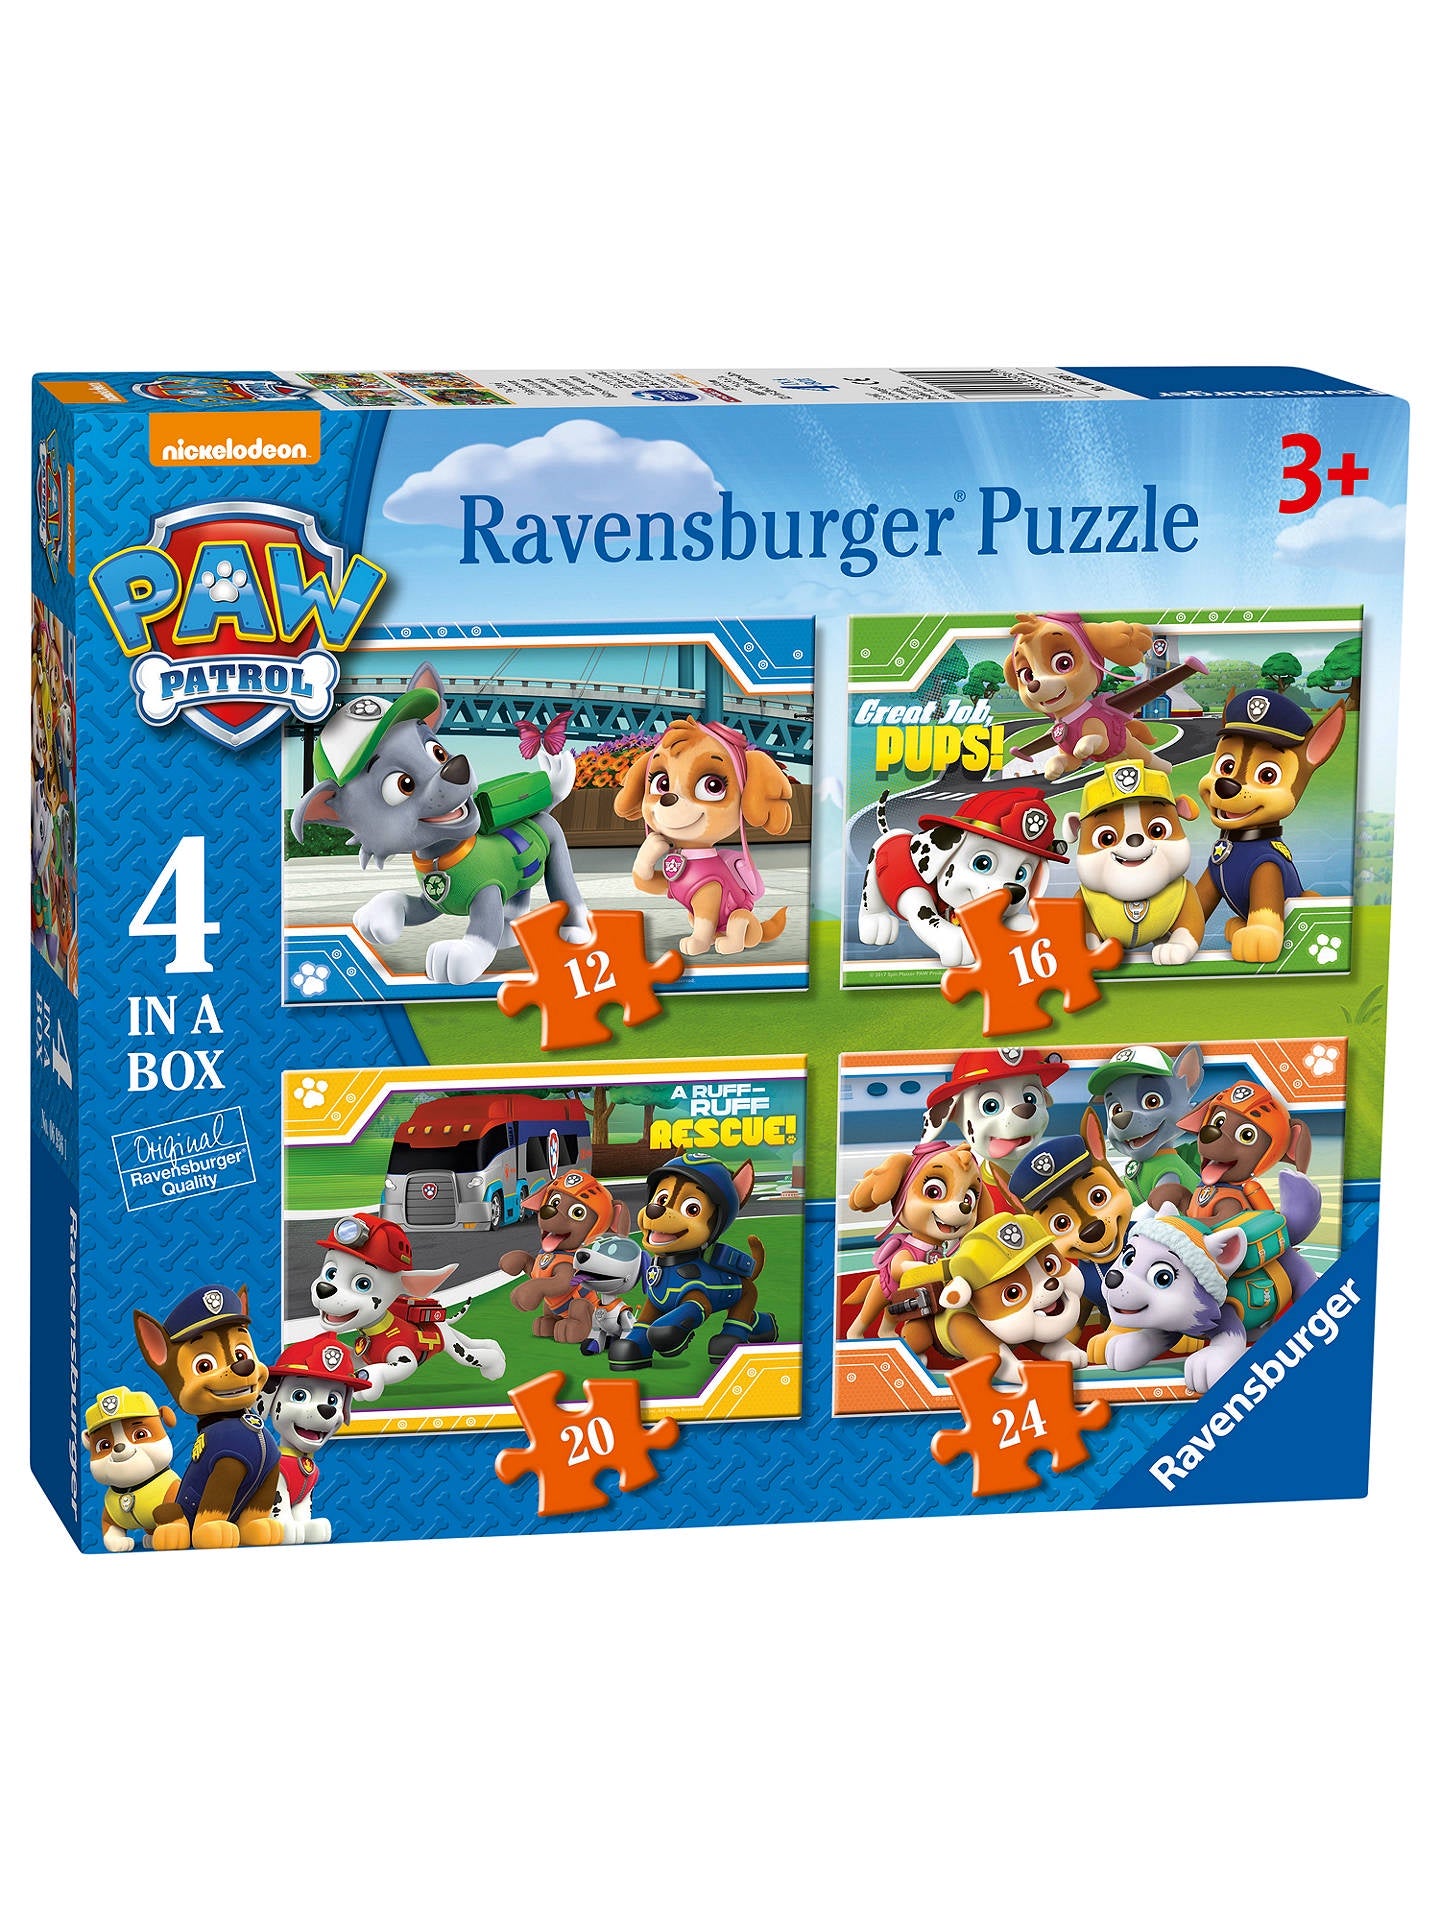 Paw Patrol 4 In a box Jigsaw Puzzle